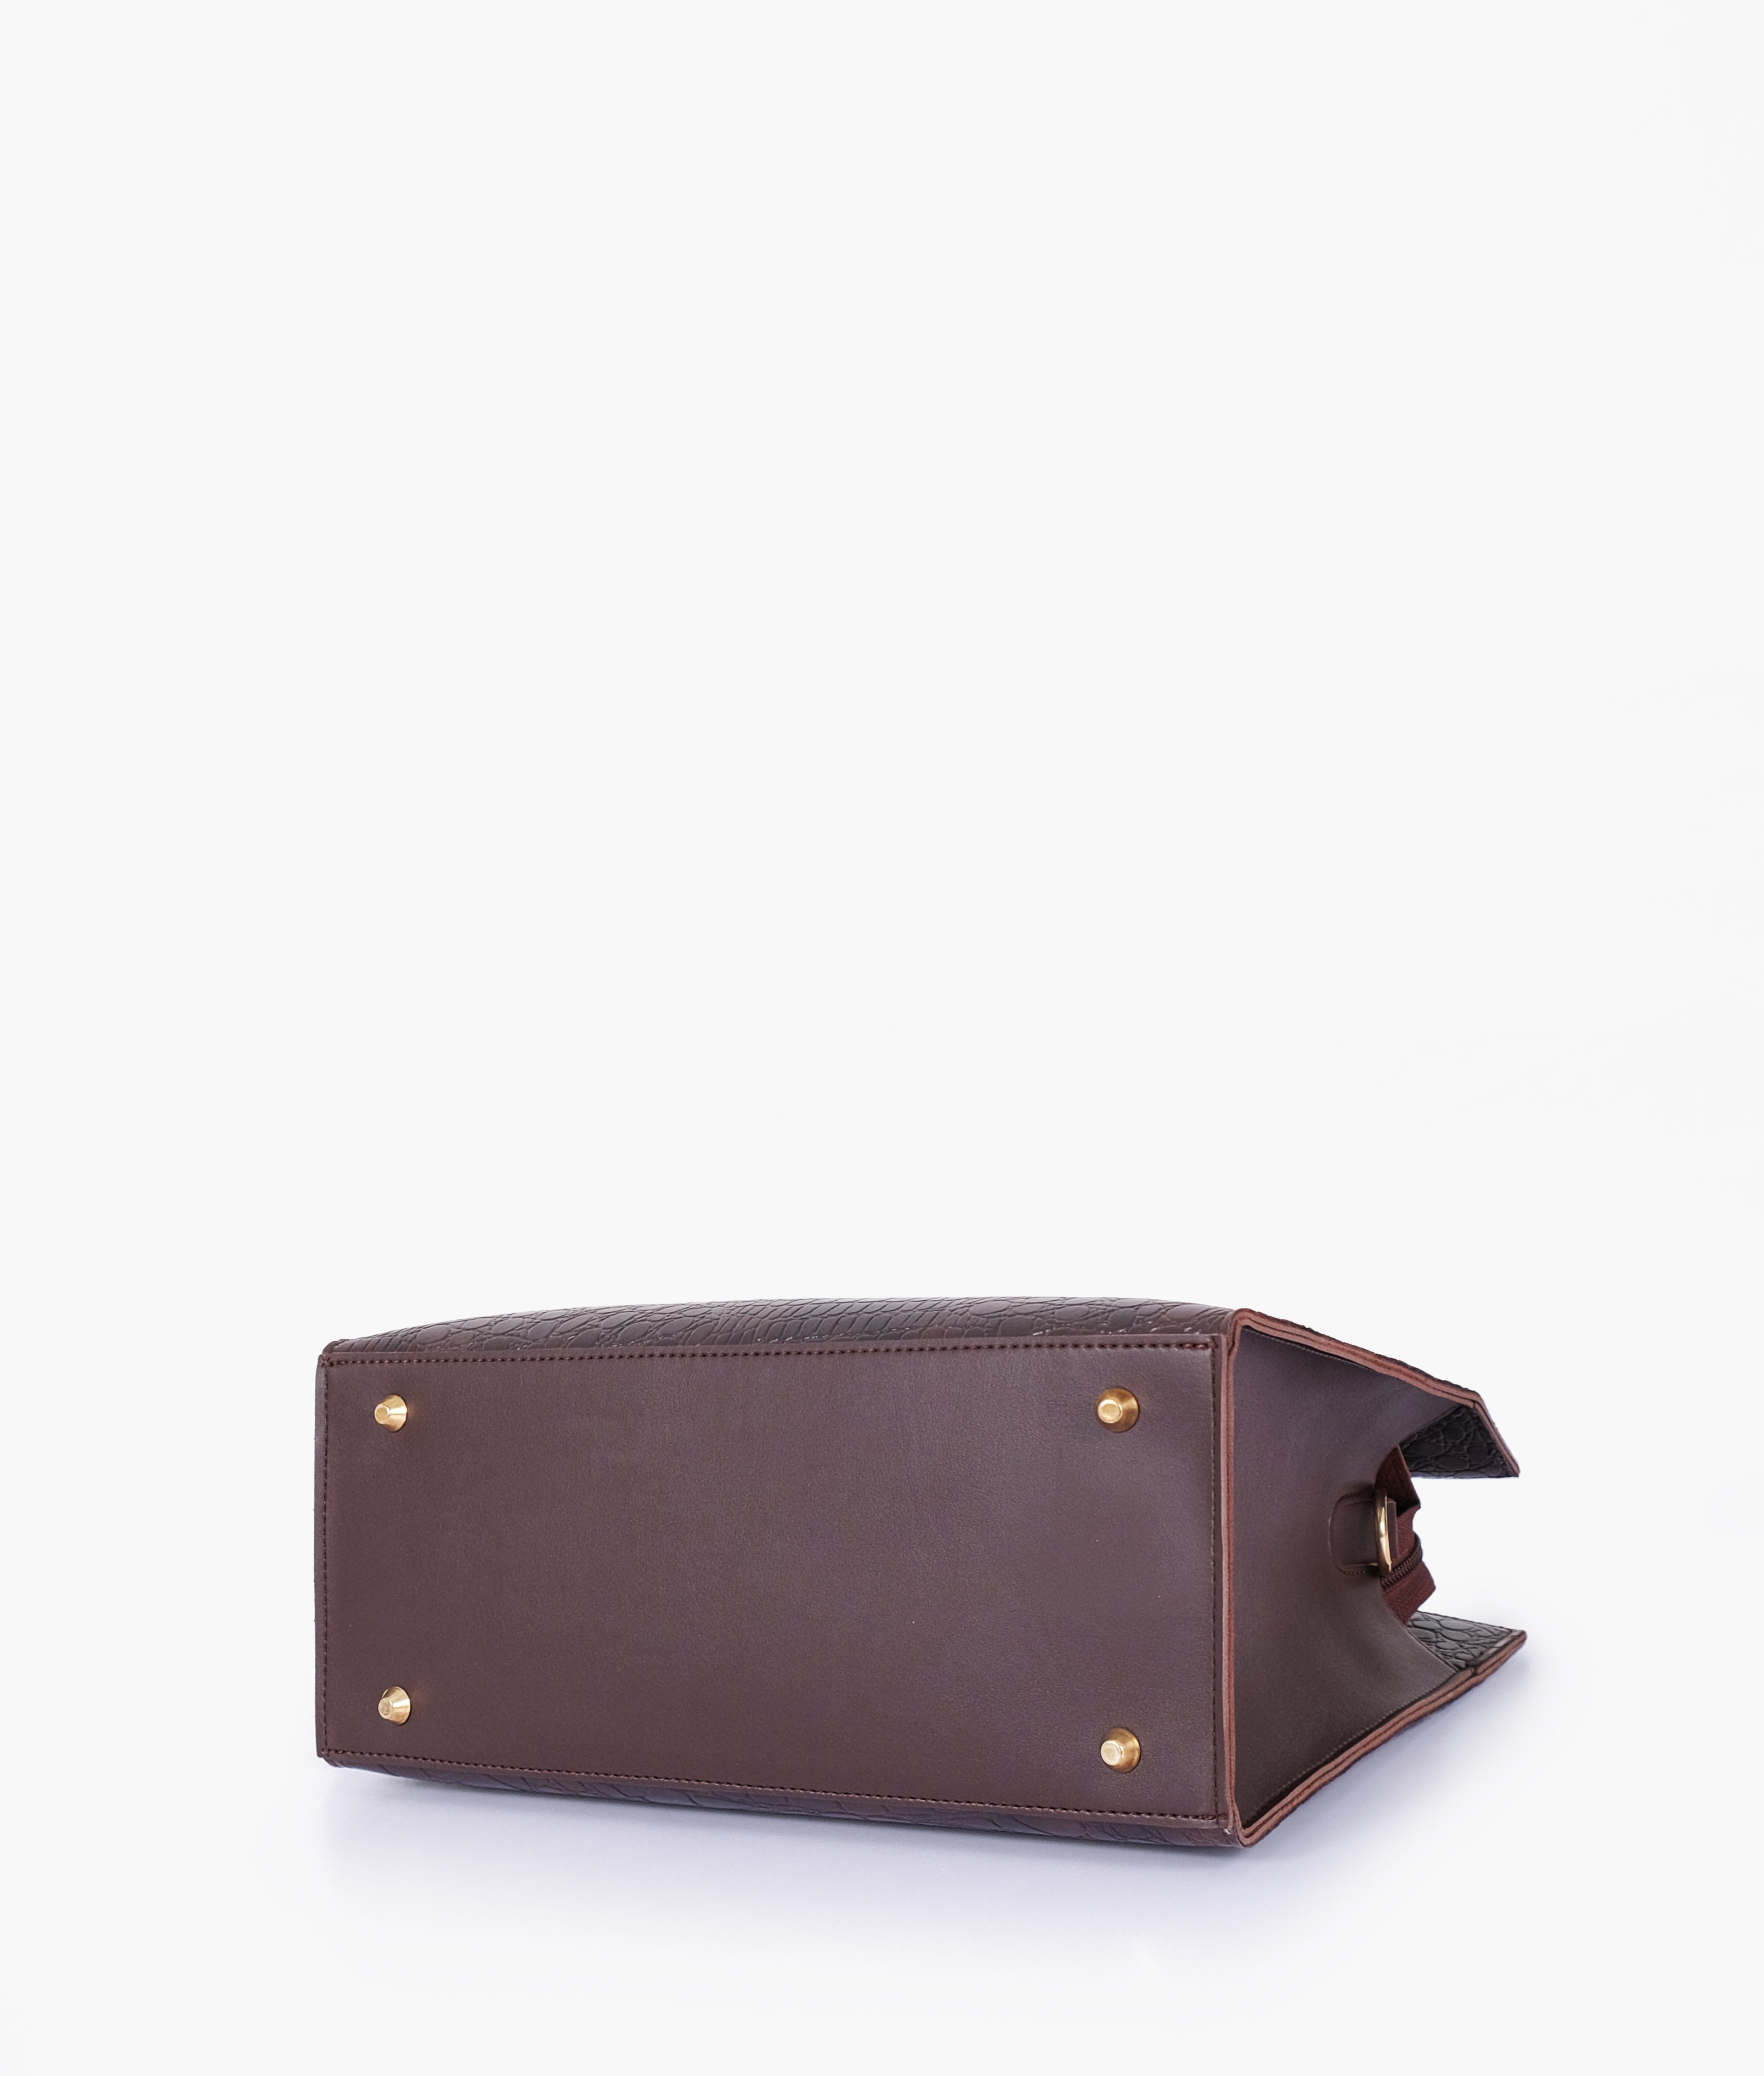 Dark brown crocodile vintage handbag